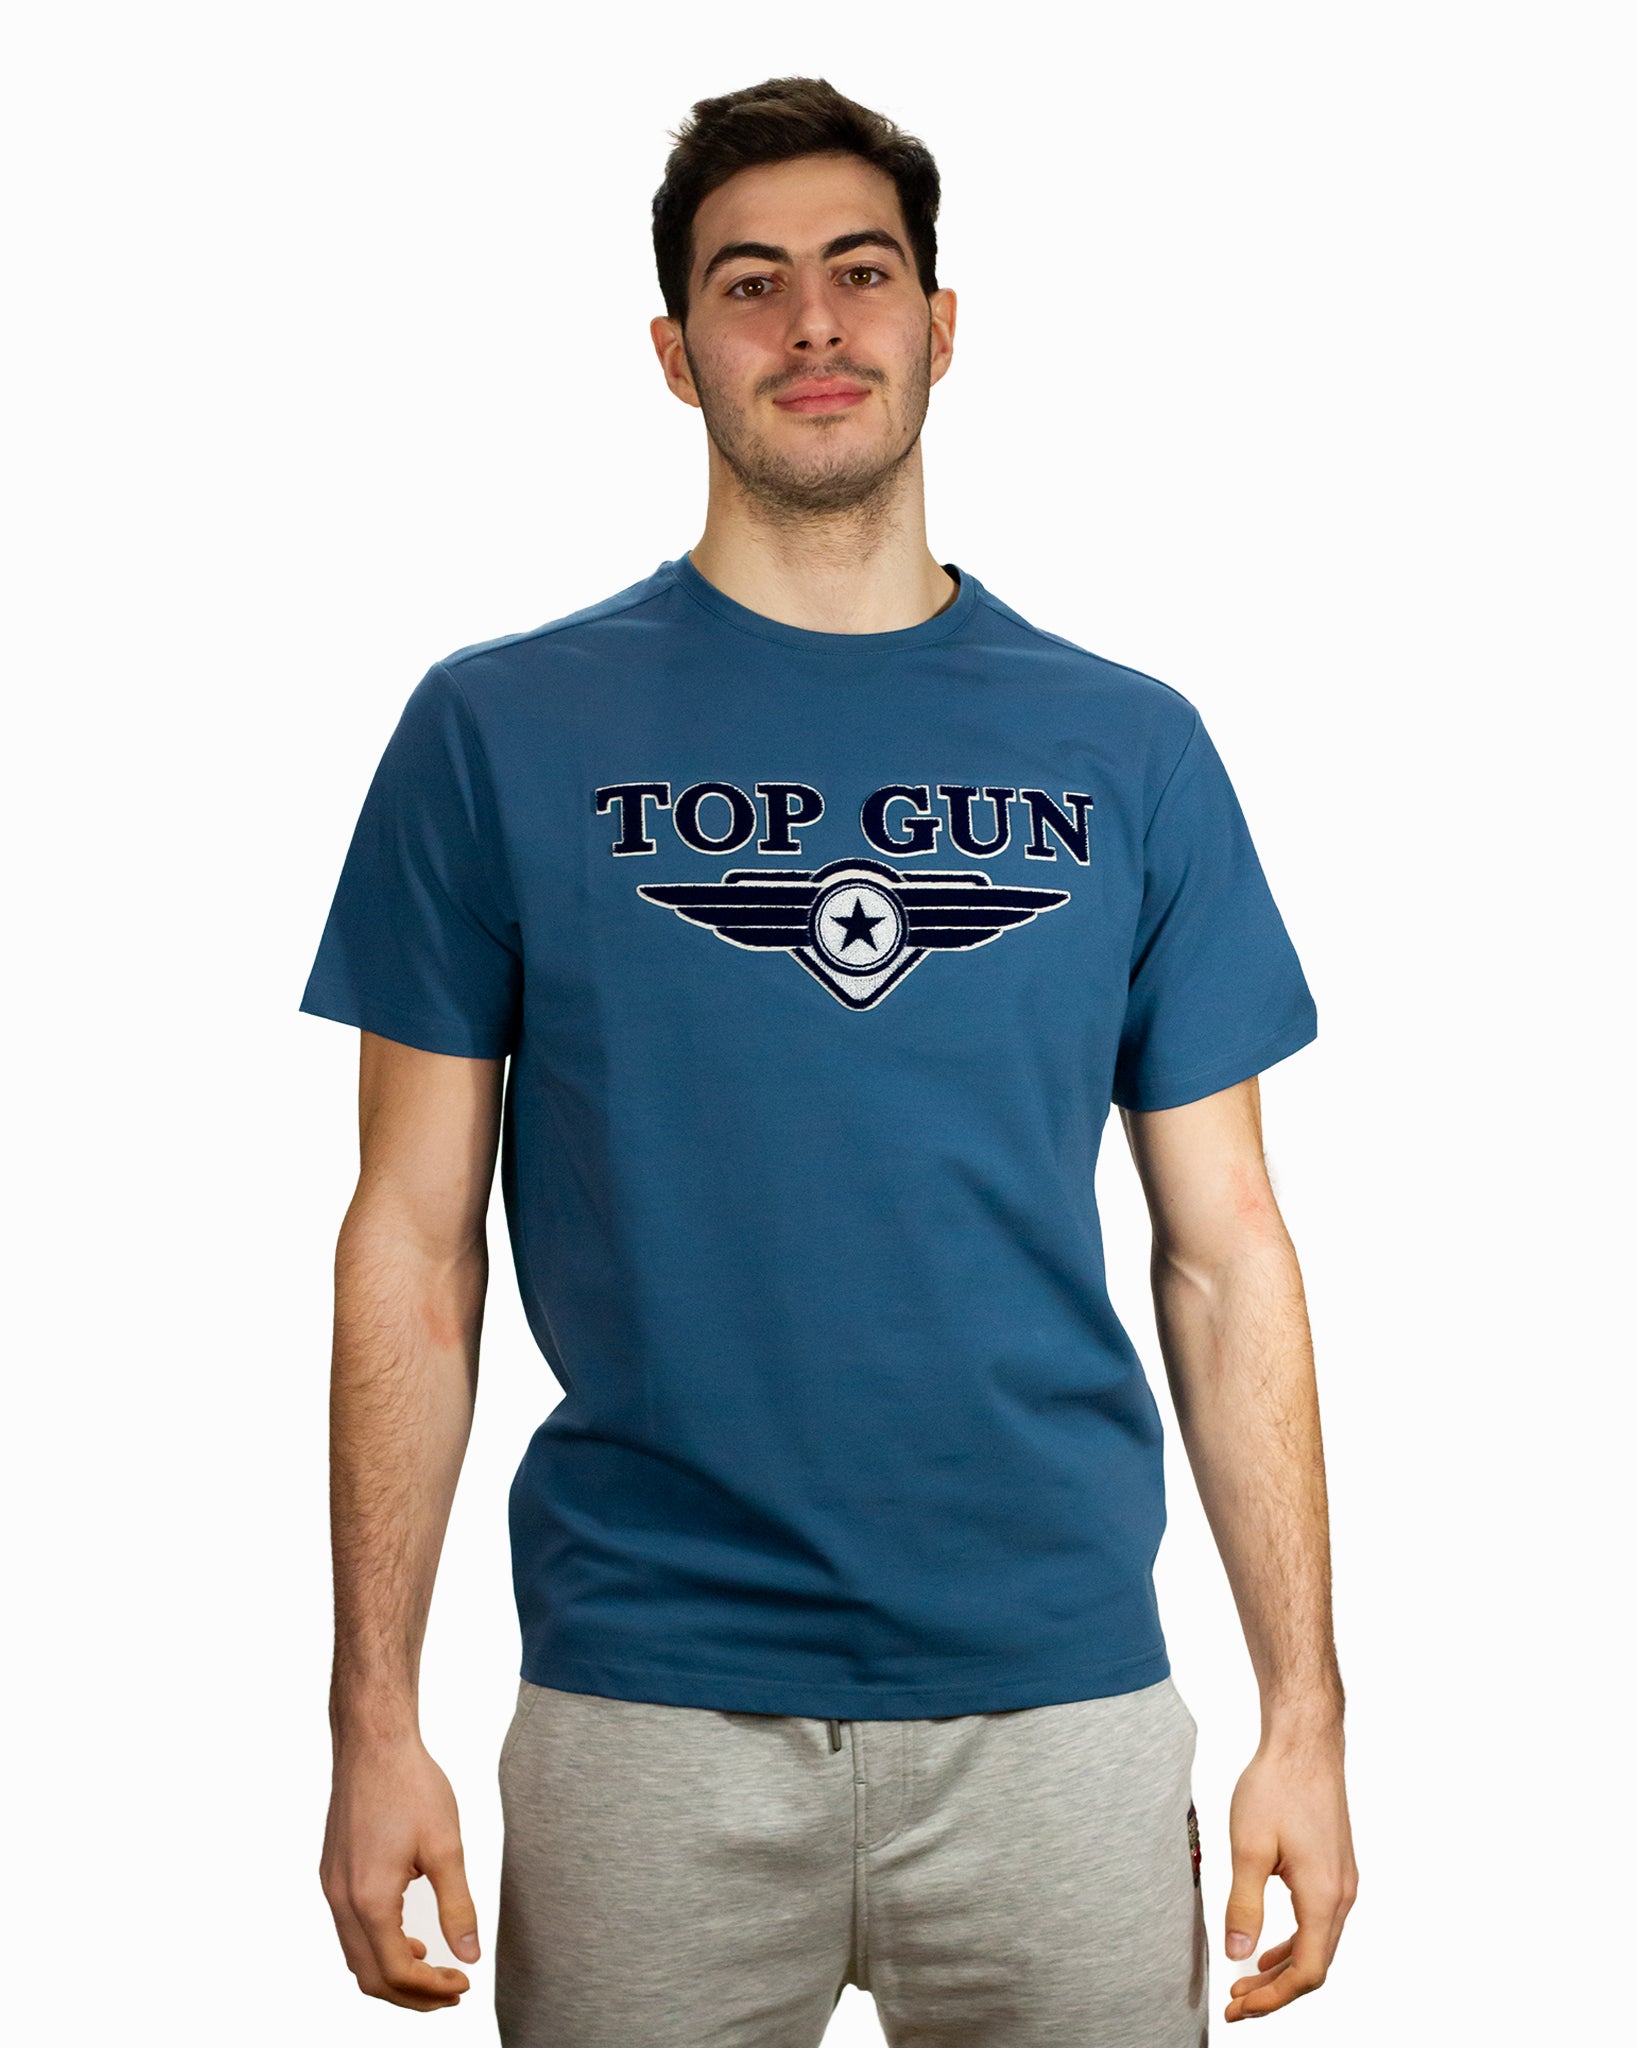 T-shirts Gun | LOGO Original Top GUN® Clothing TOP TOP TEE – | GUN TOP Store EMBROIDERED GUN